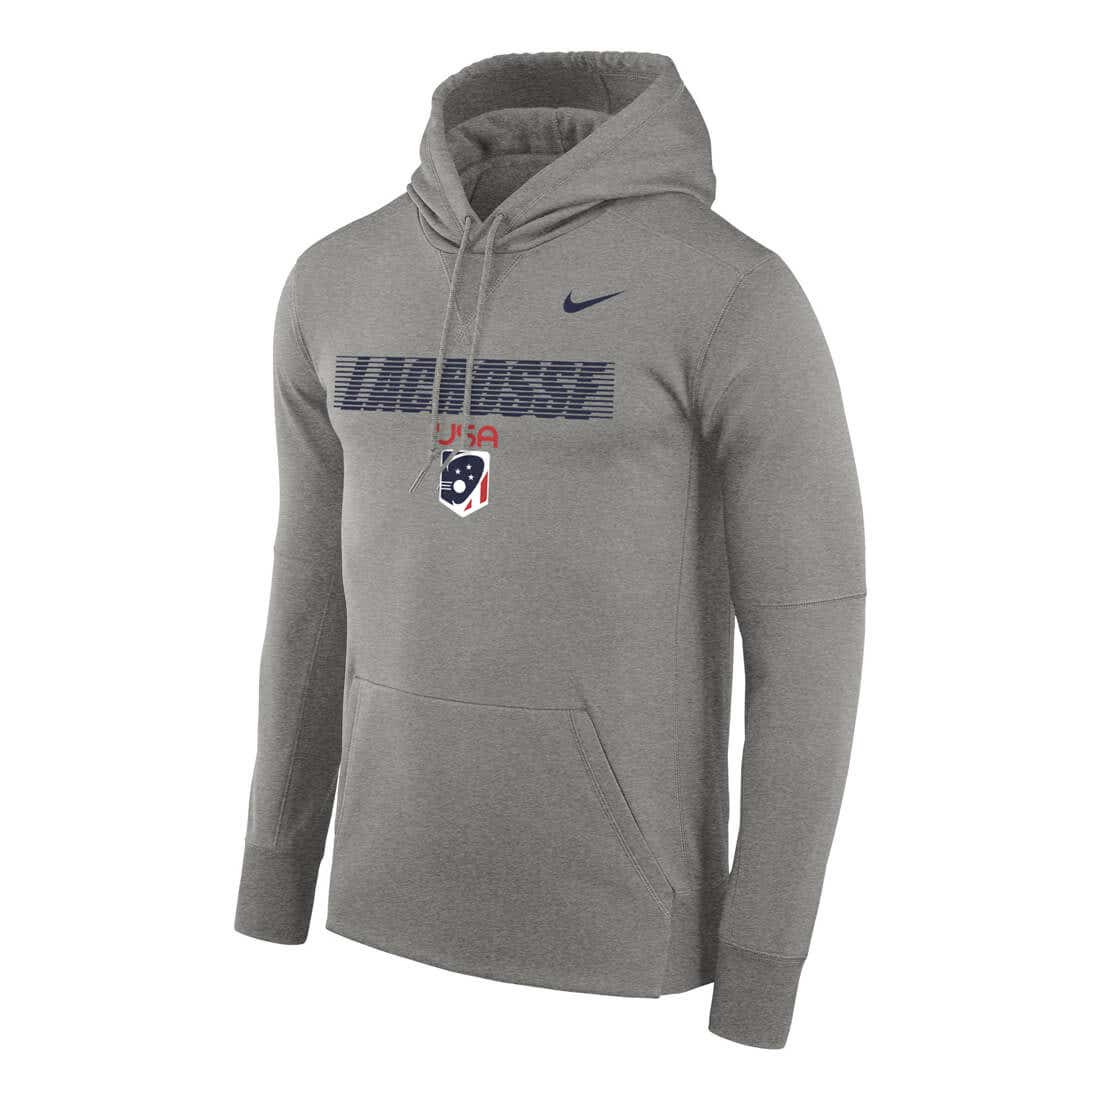 Nike Therma USA Sweatshirt - Adult | Lacrosse Unlimited